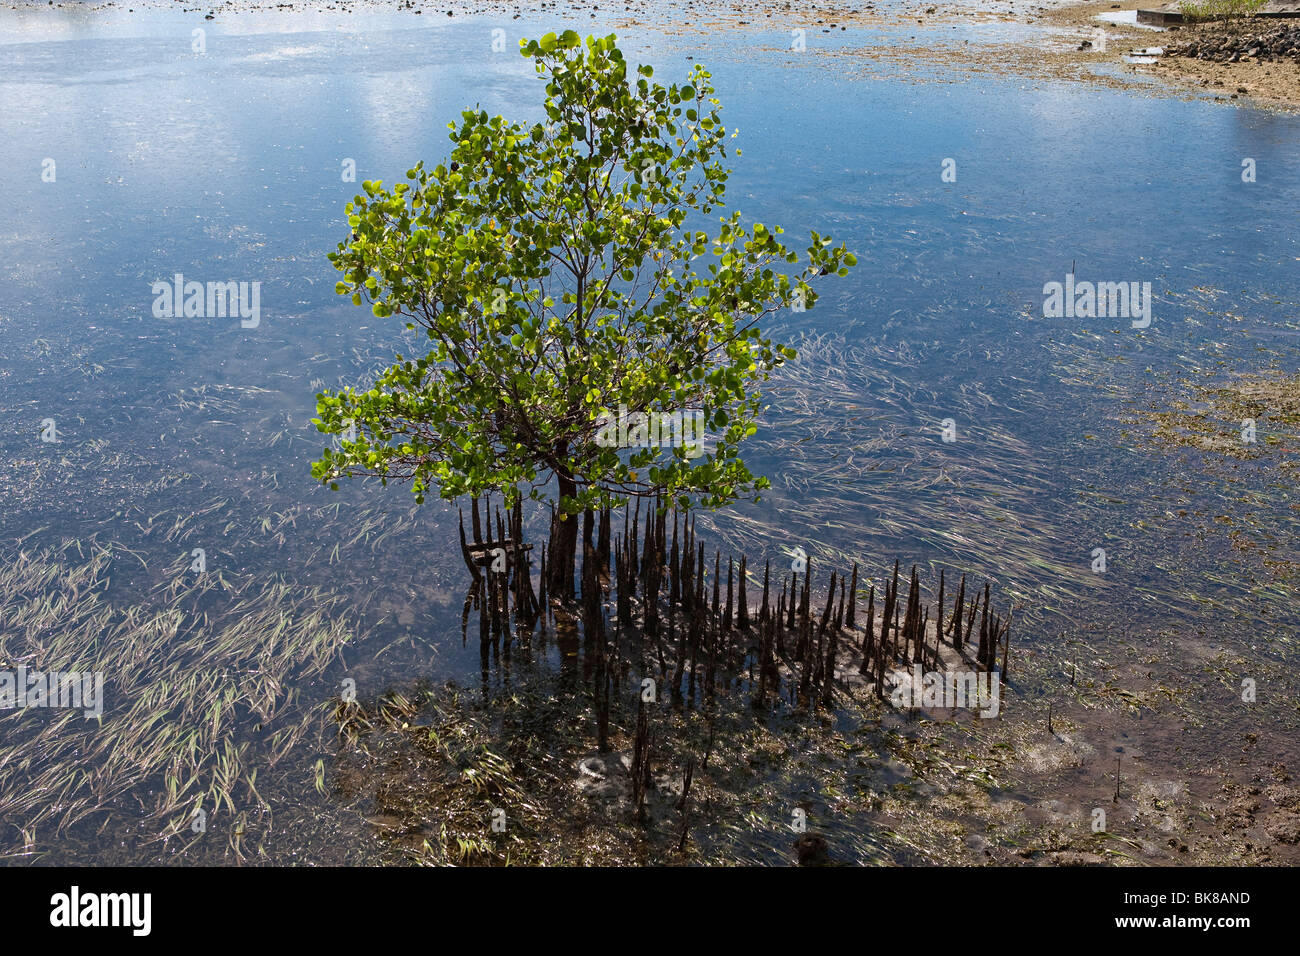 Mangrove tree, Indonesia, Asia Stock Photo